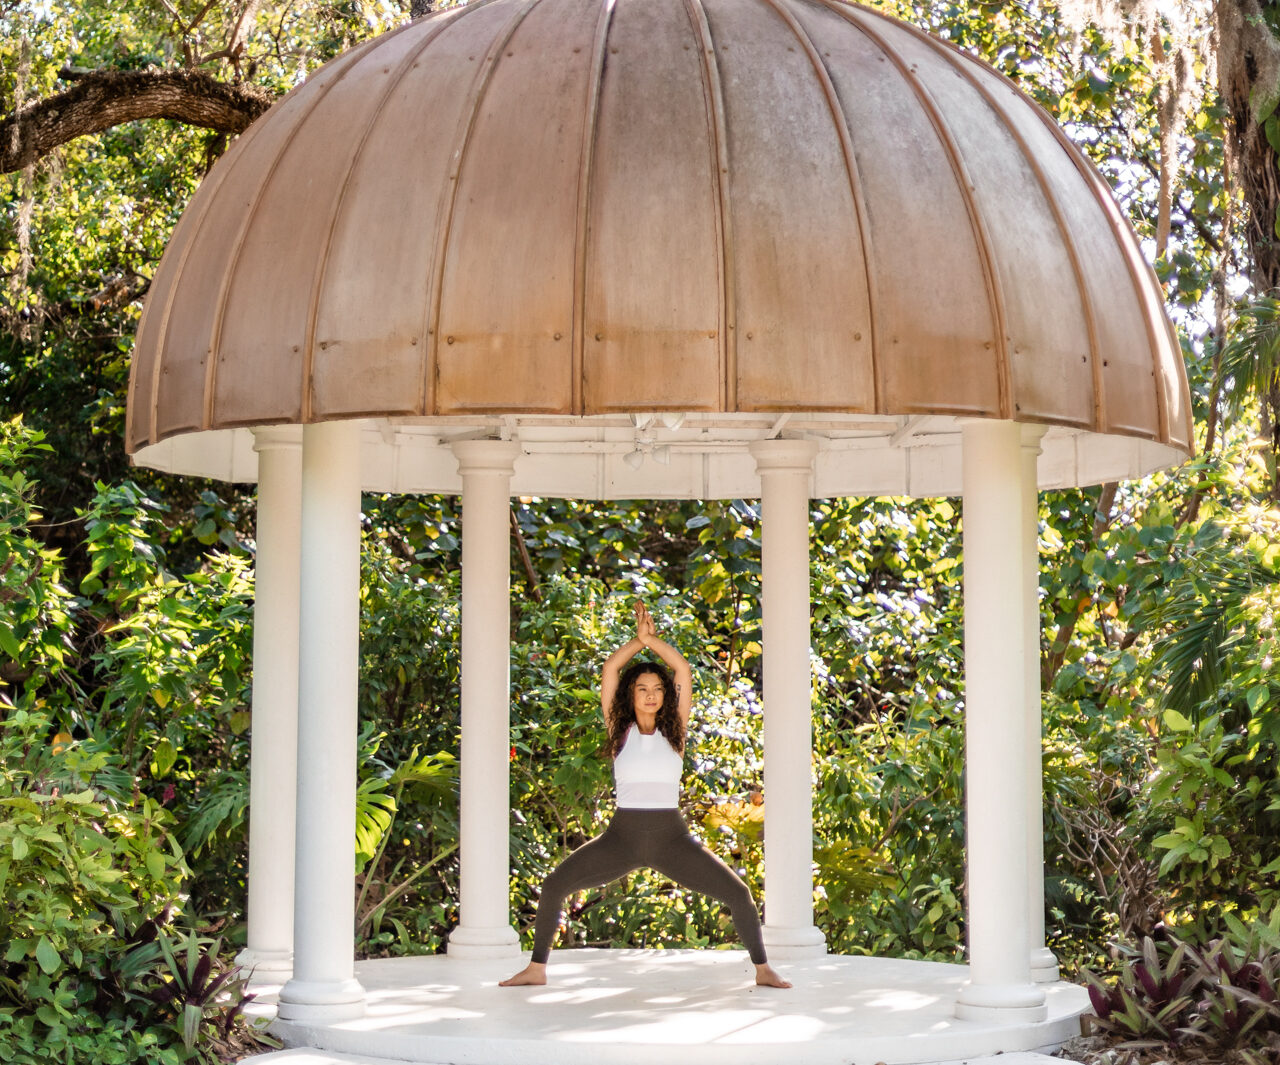 Pranayama breathwork led by yoga instructor Kim Quan